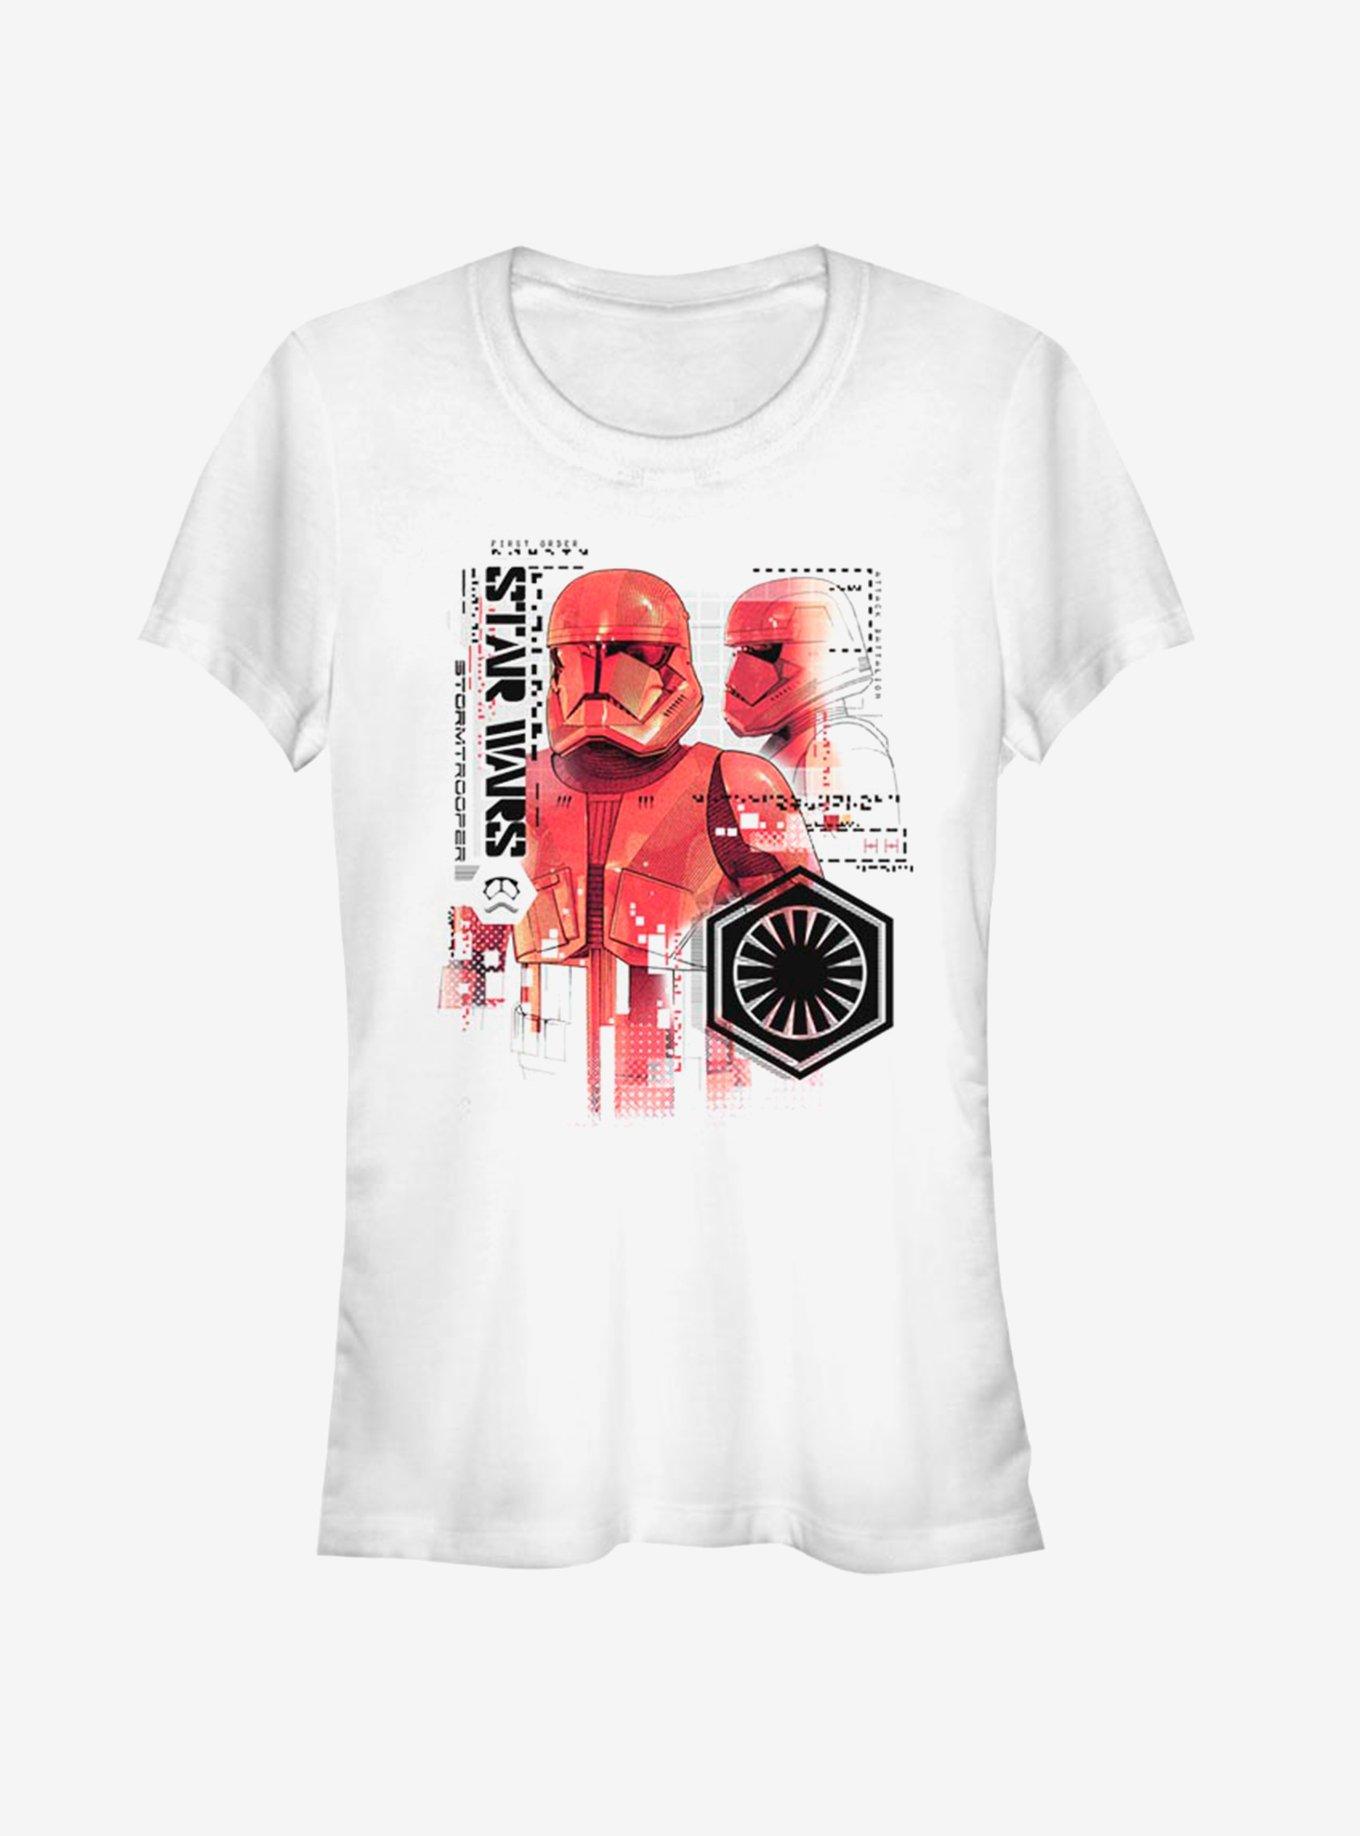 Star Wars Episode IX Rise of Skywalker Red Trooper Schematic Girls T-Shirt, WHITE, hi-res